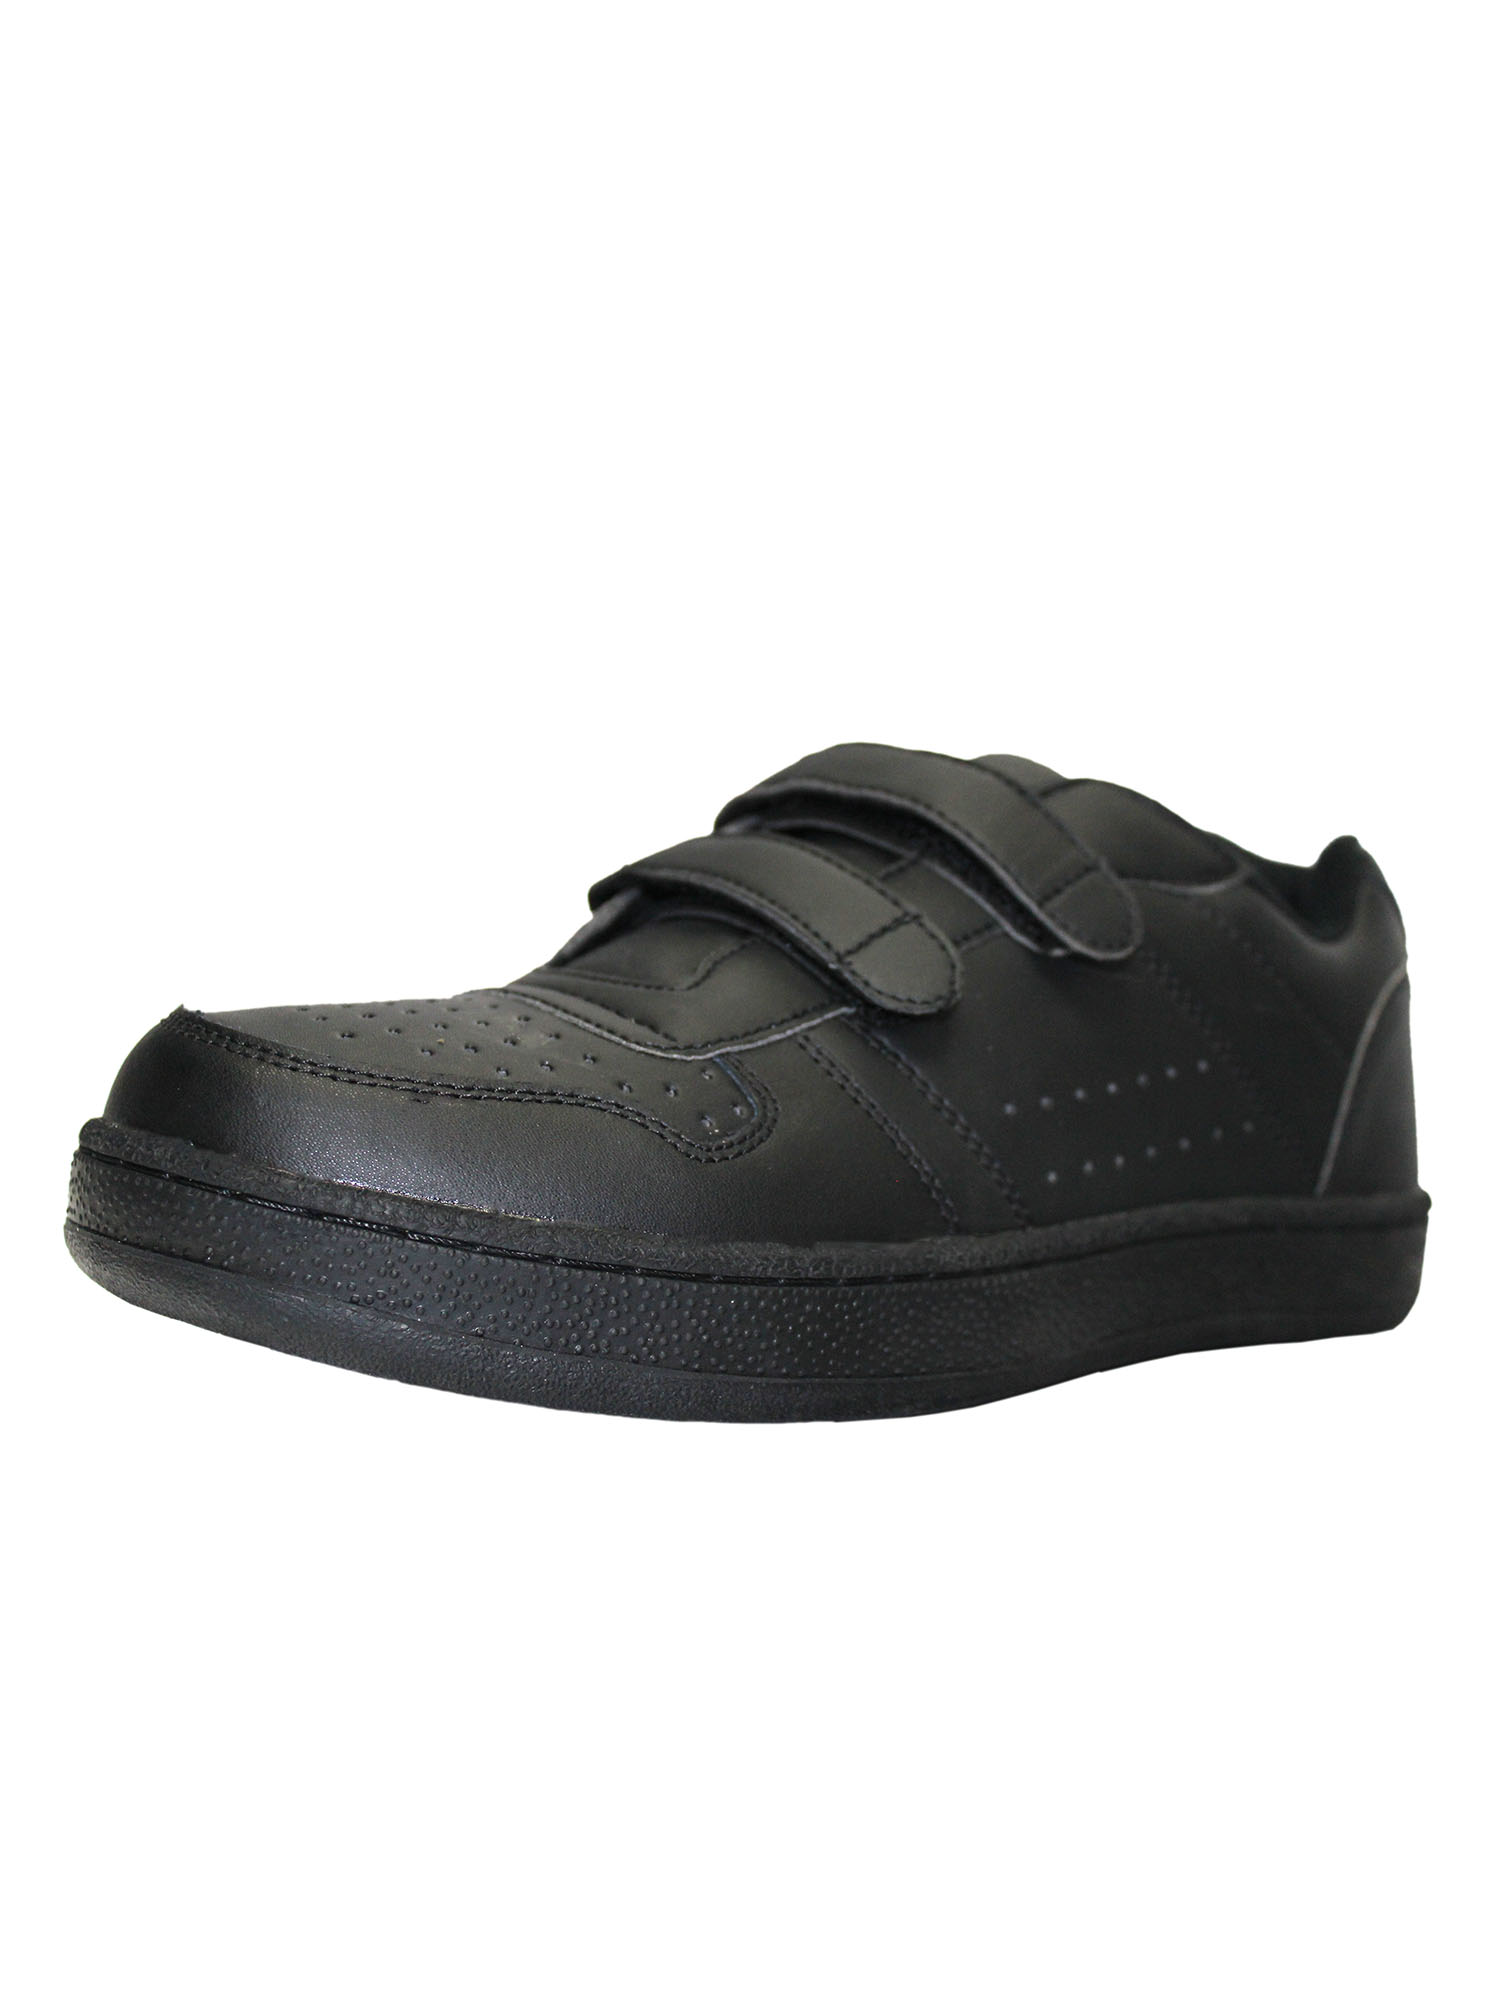 Tanleewa Men's Leather Strap Sneakers Lightweight Hook and Loop Walking Shoe Size 5.5 Adult Male - image 1 of 4